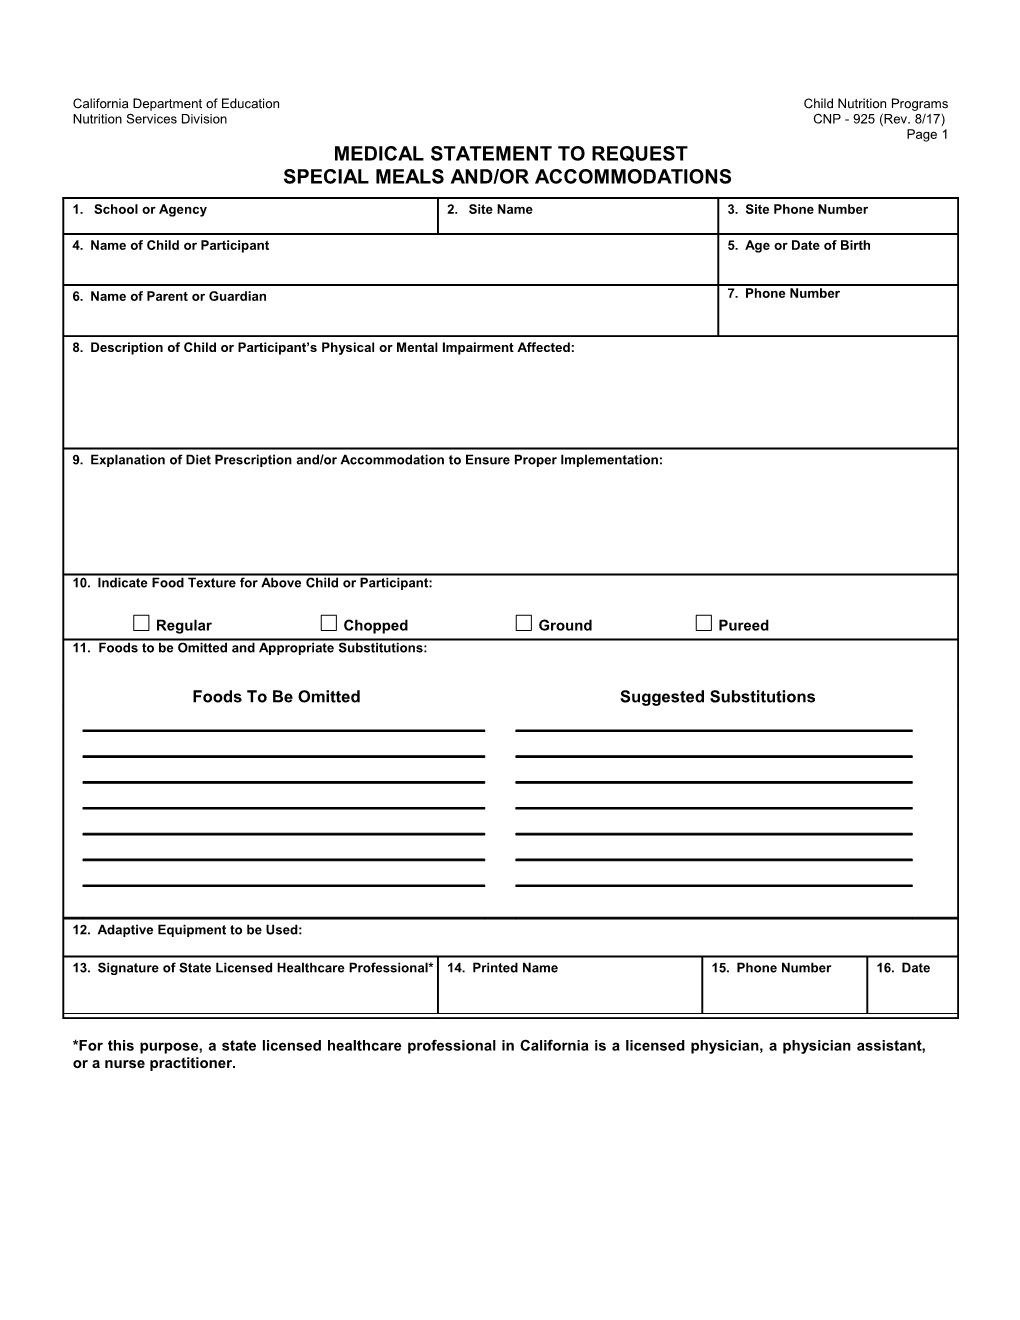 Medical Statement Form - USDA Civil Rights (CA Dept of Education)